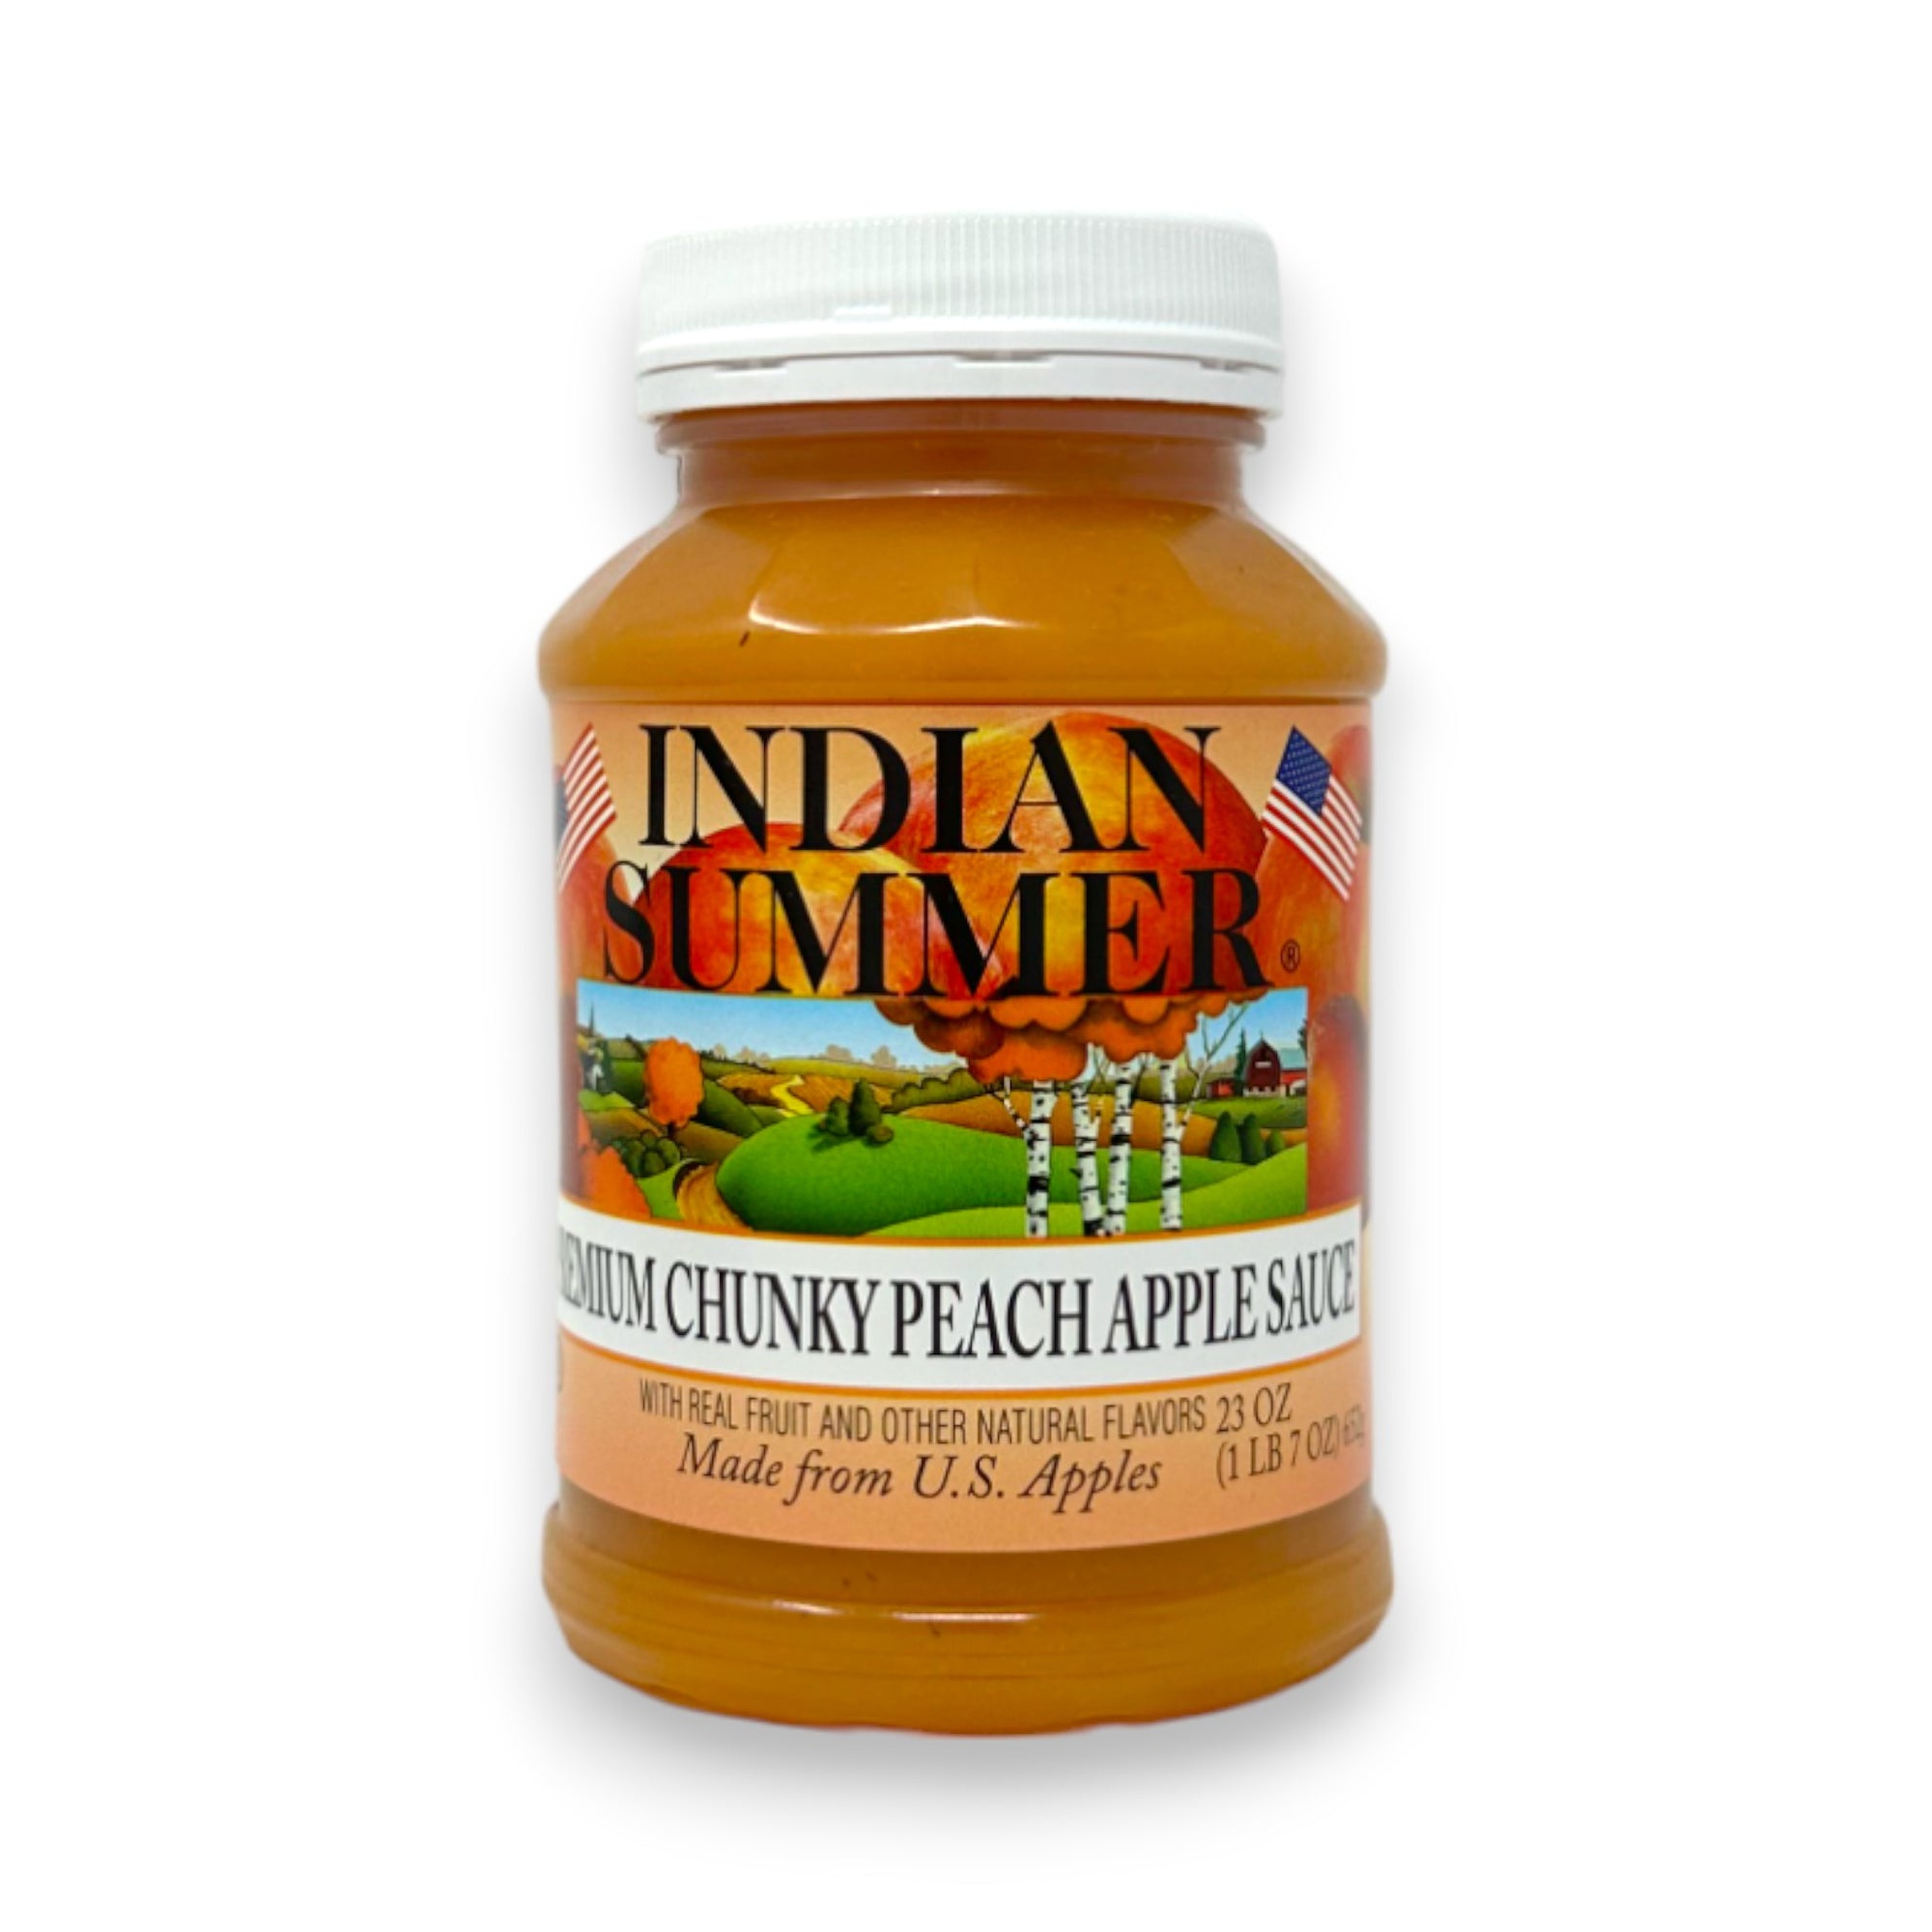 Indian Summer Premium Chunky Peach Applesauce